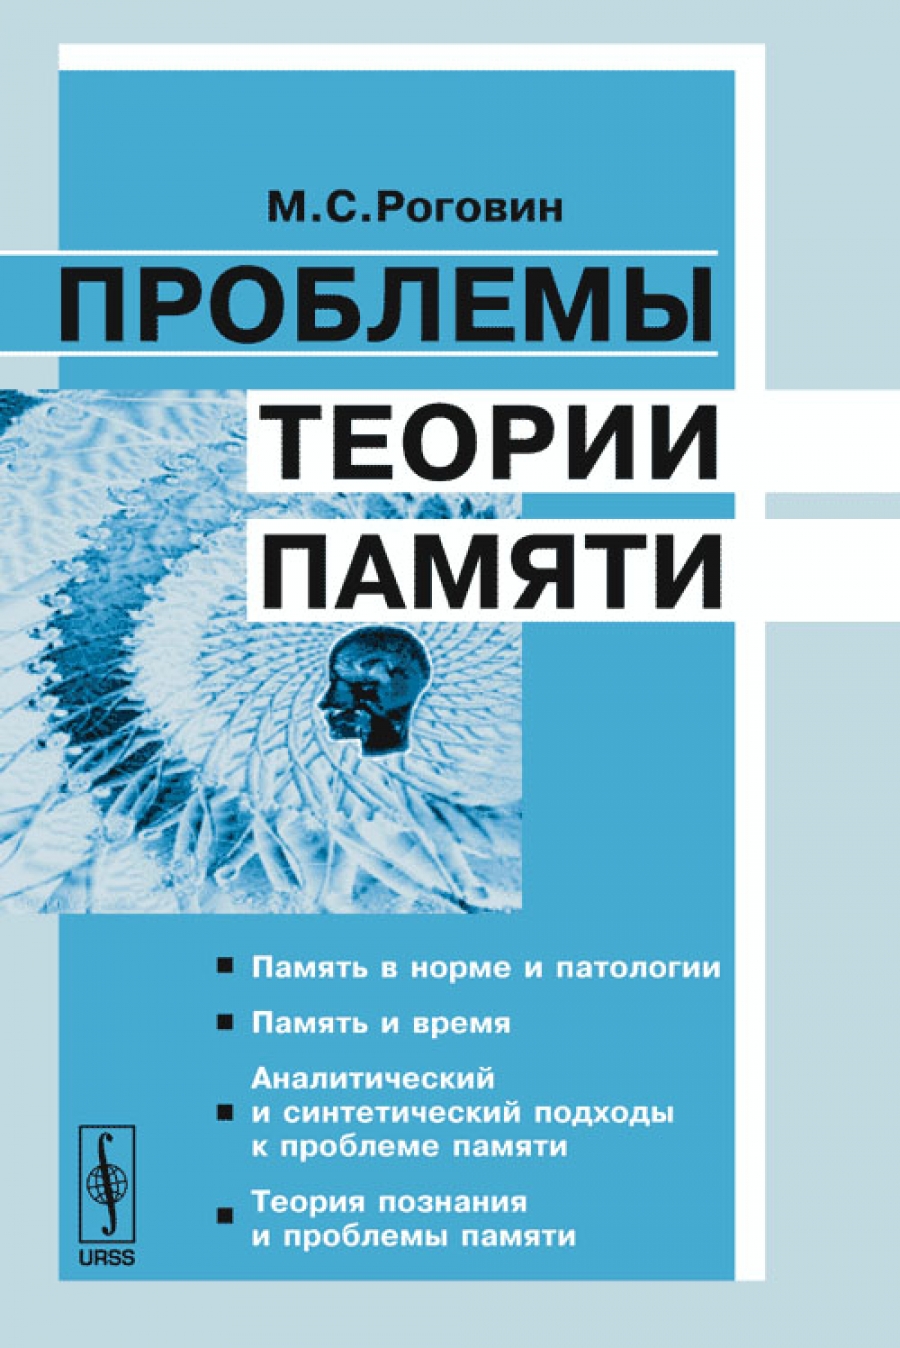 Теории памяти. Книга про память человека. Роговин психолог.